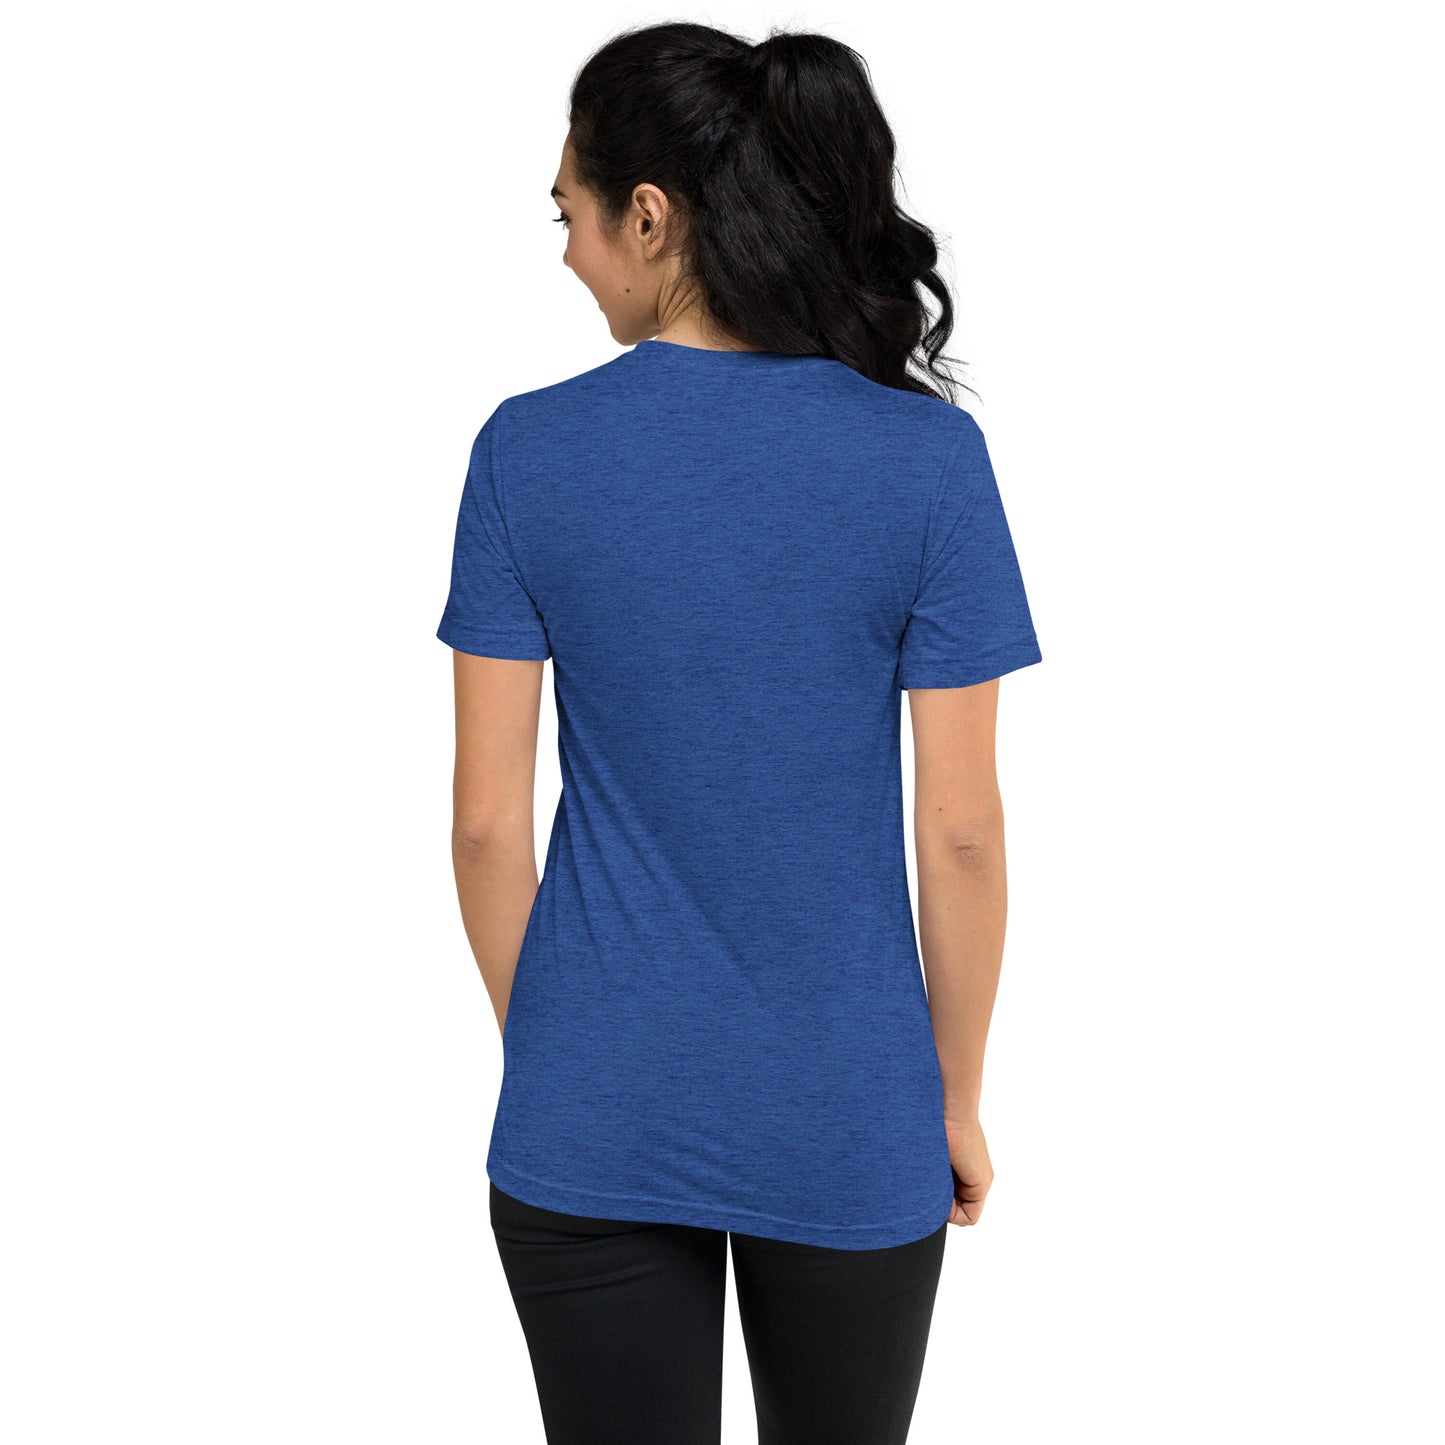 212 NYC Strong Short Sleeve Tri-blend T-Shirt